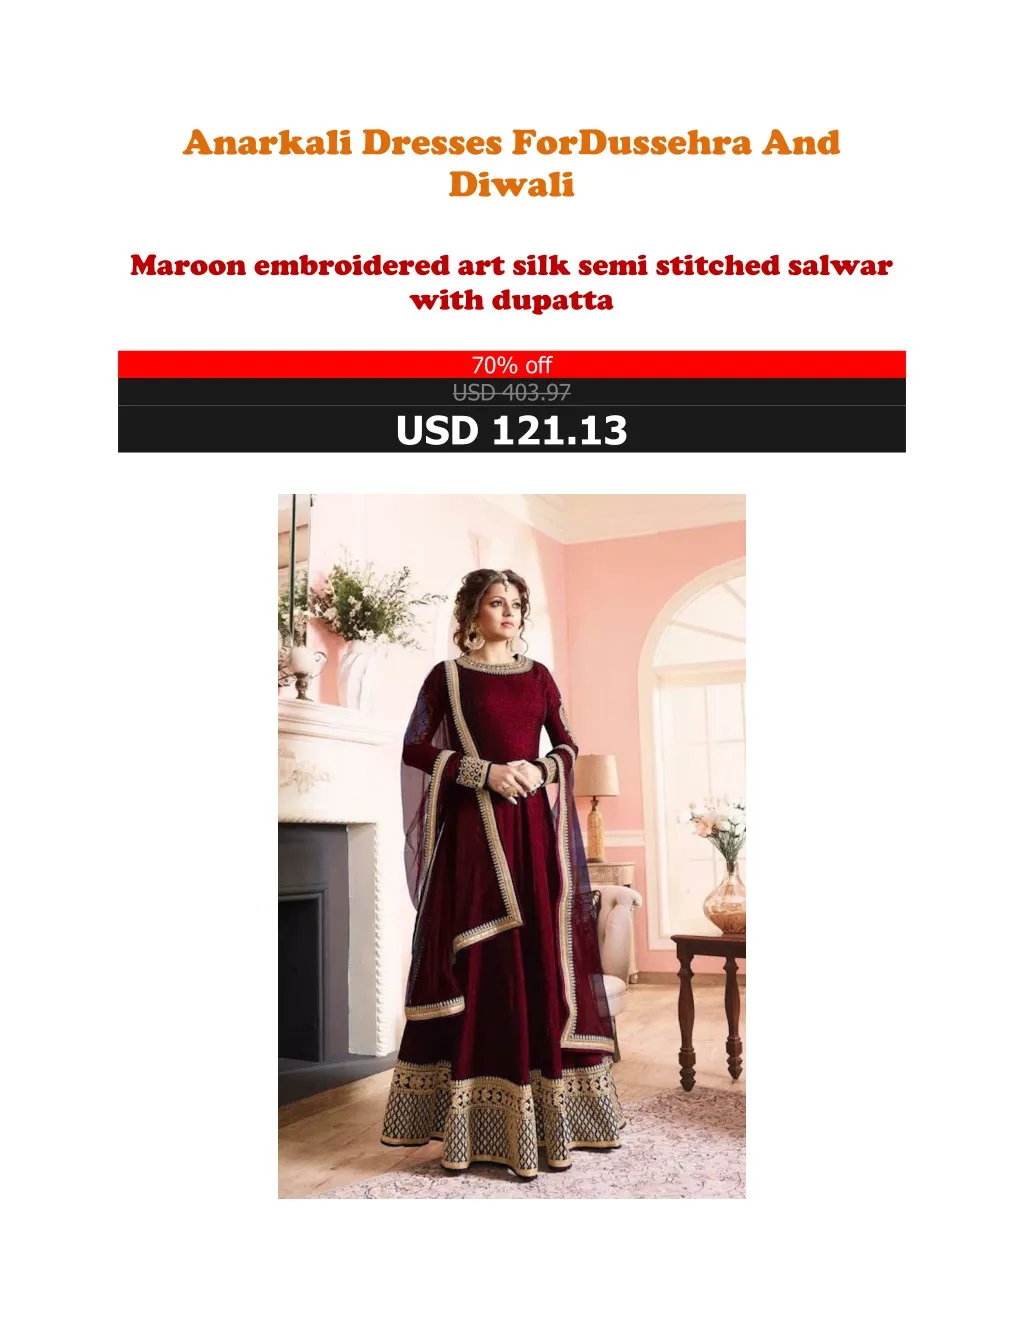 anarkali dresses fordussehra and diwali maroon